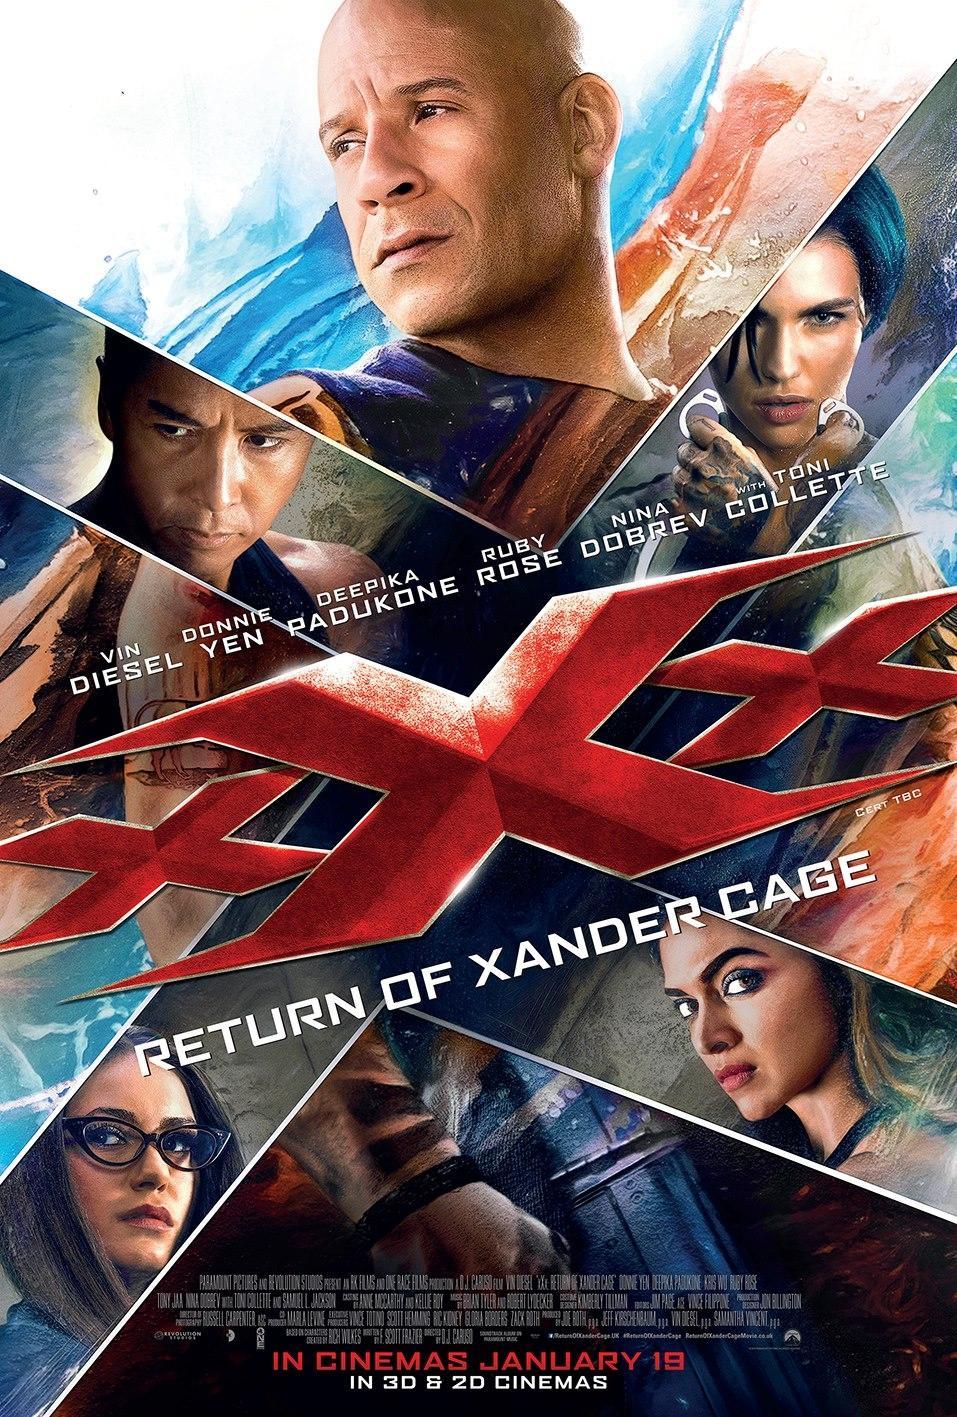 Постер фильма Три икса: Мировое господство | xXx: Return of Xander Cage